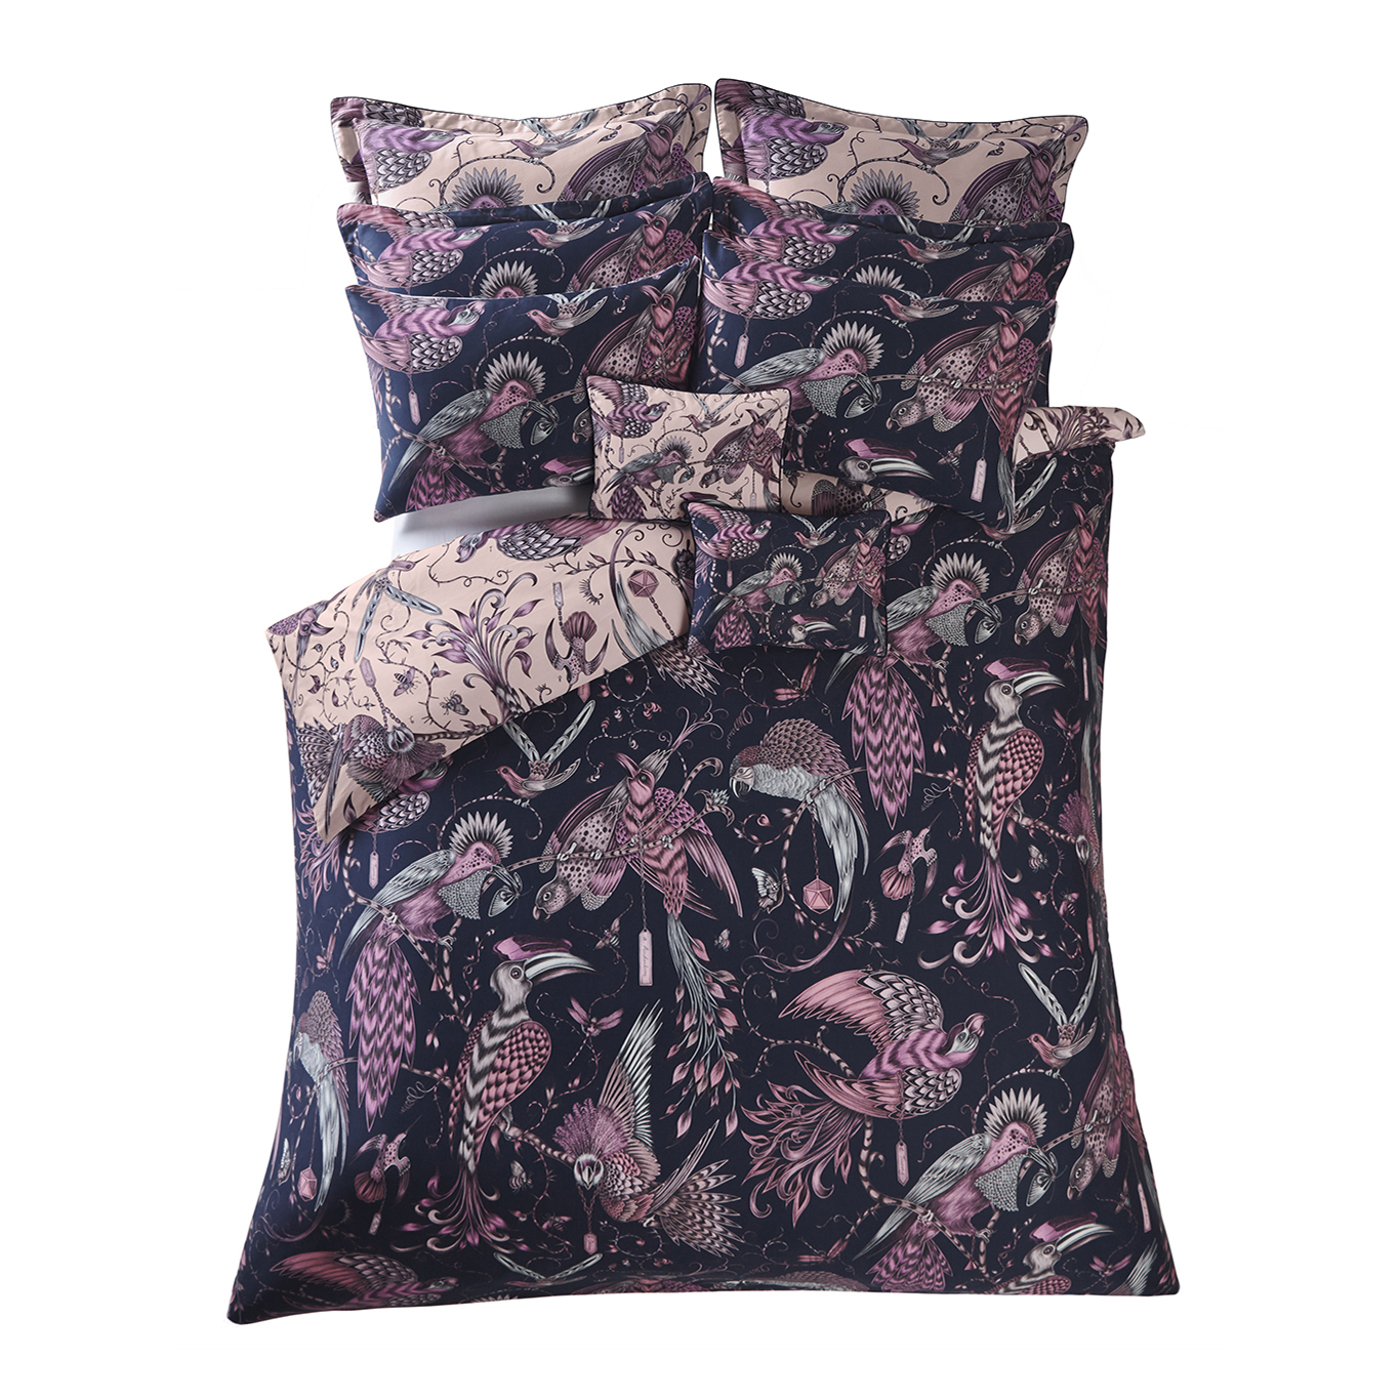 Audubon 65X65 Square Piped Pillowcase Pink Bedding by CNC